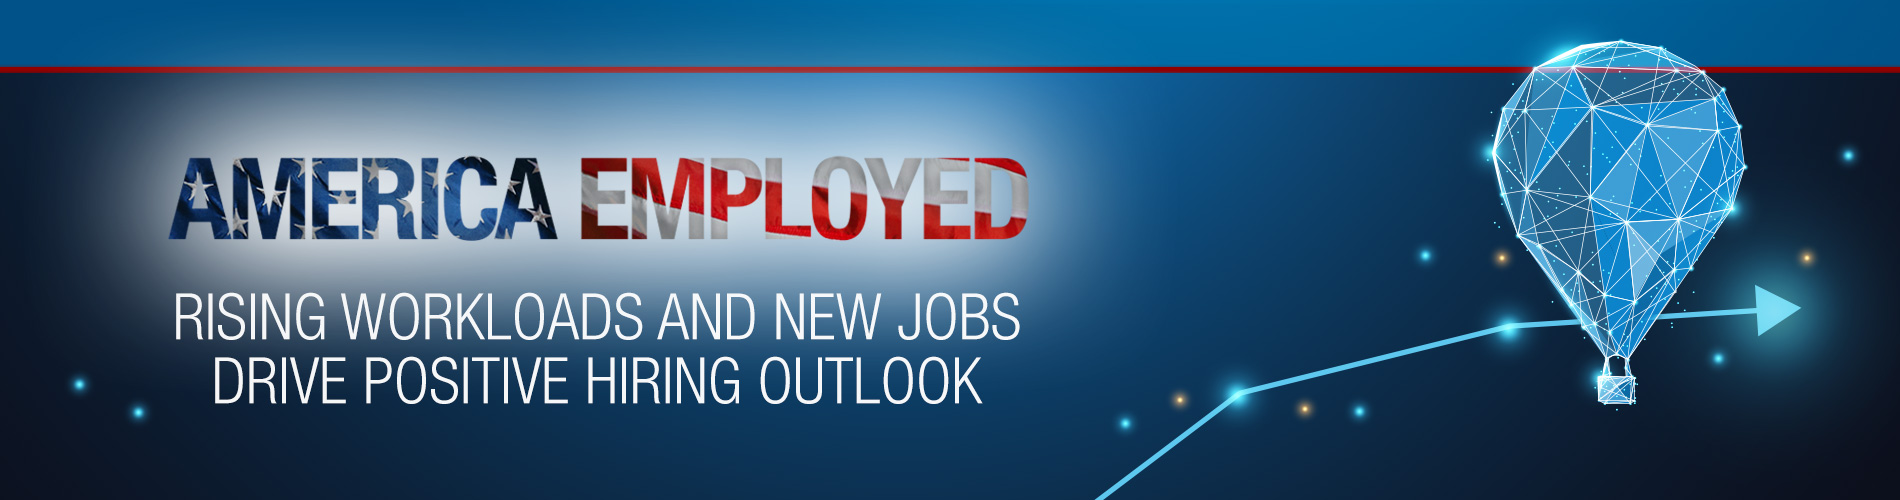 7-24-24 - Hiring Outlook - America Employed